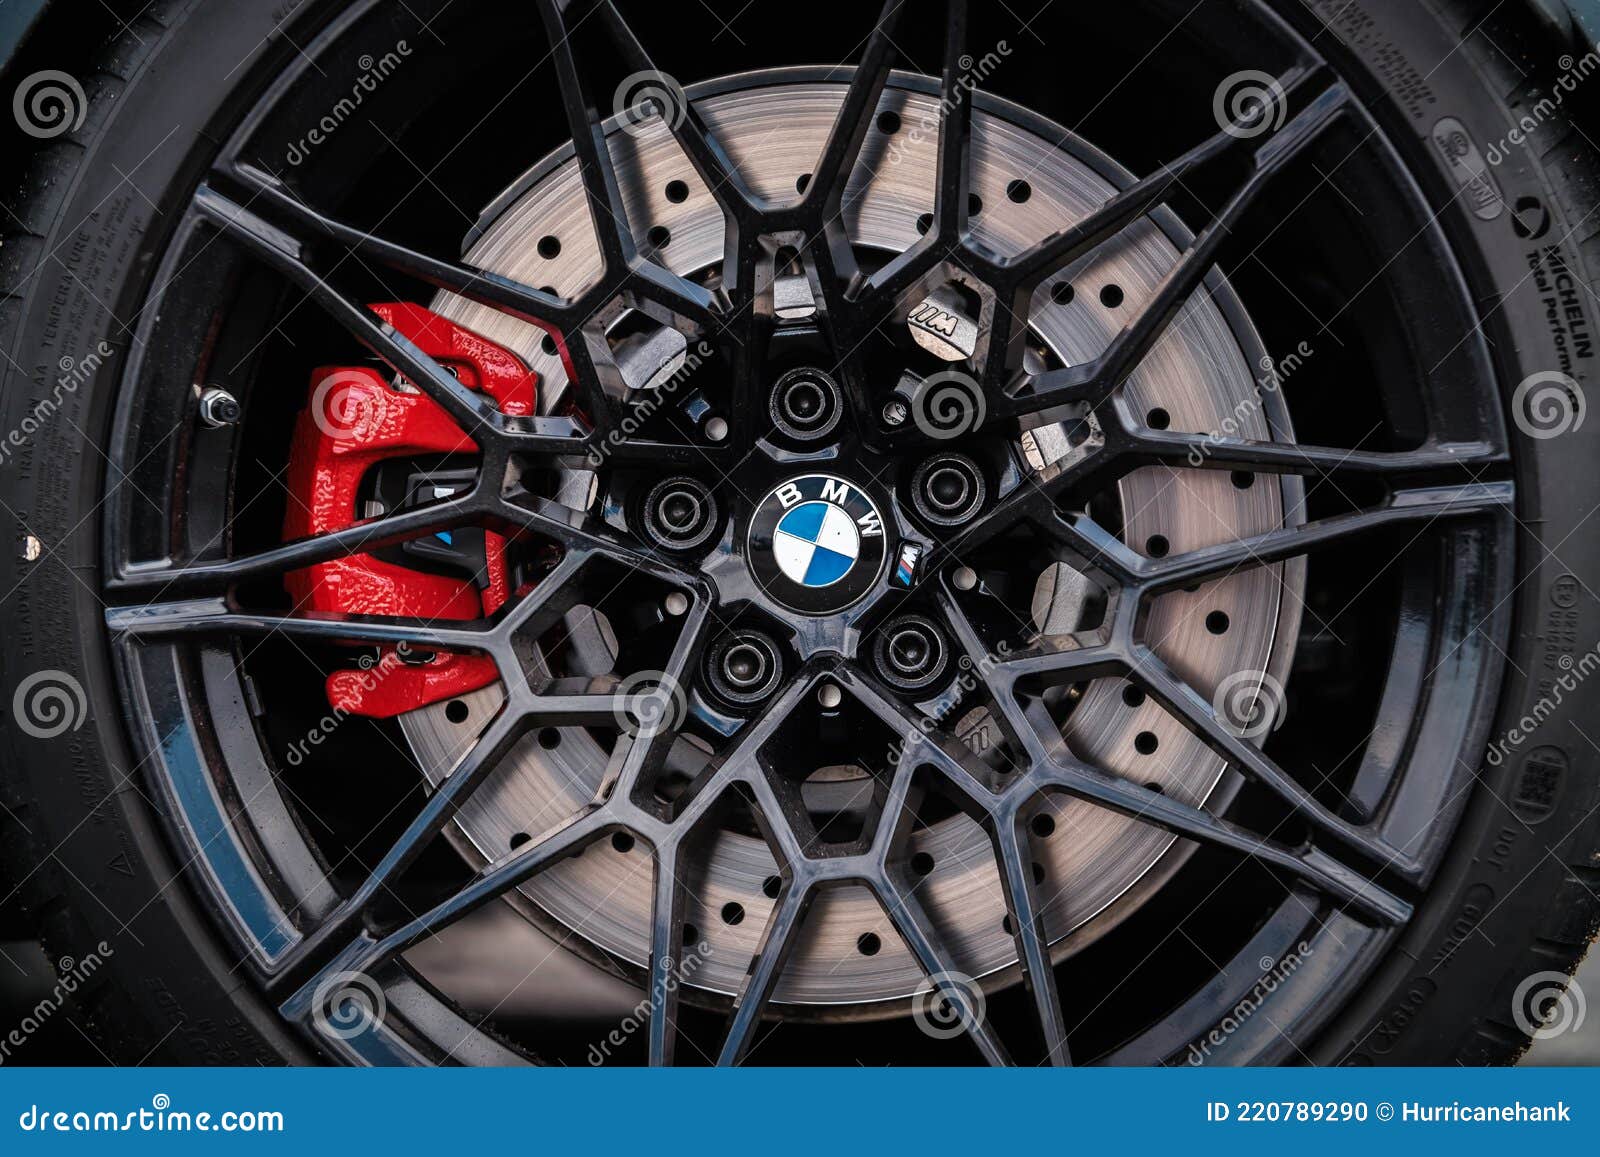 BMW Performance Parts, BMW Tuning